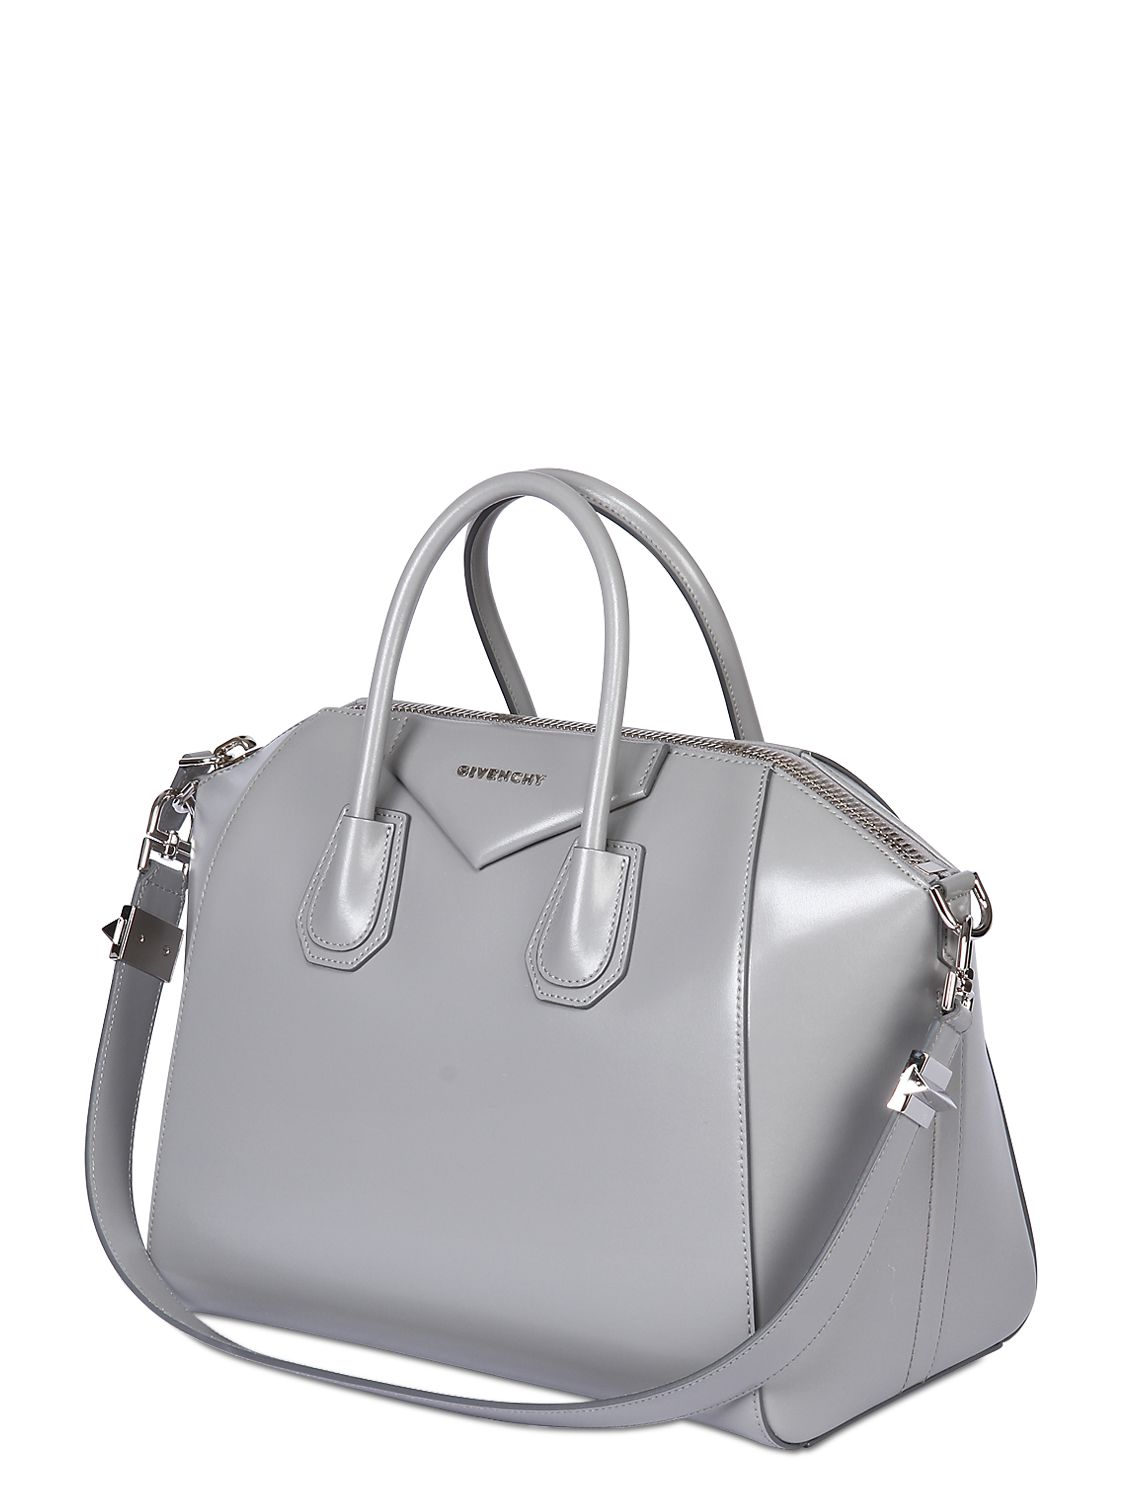 Givenchy Antigona Medium Grained Leather Handbag